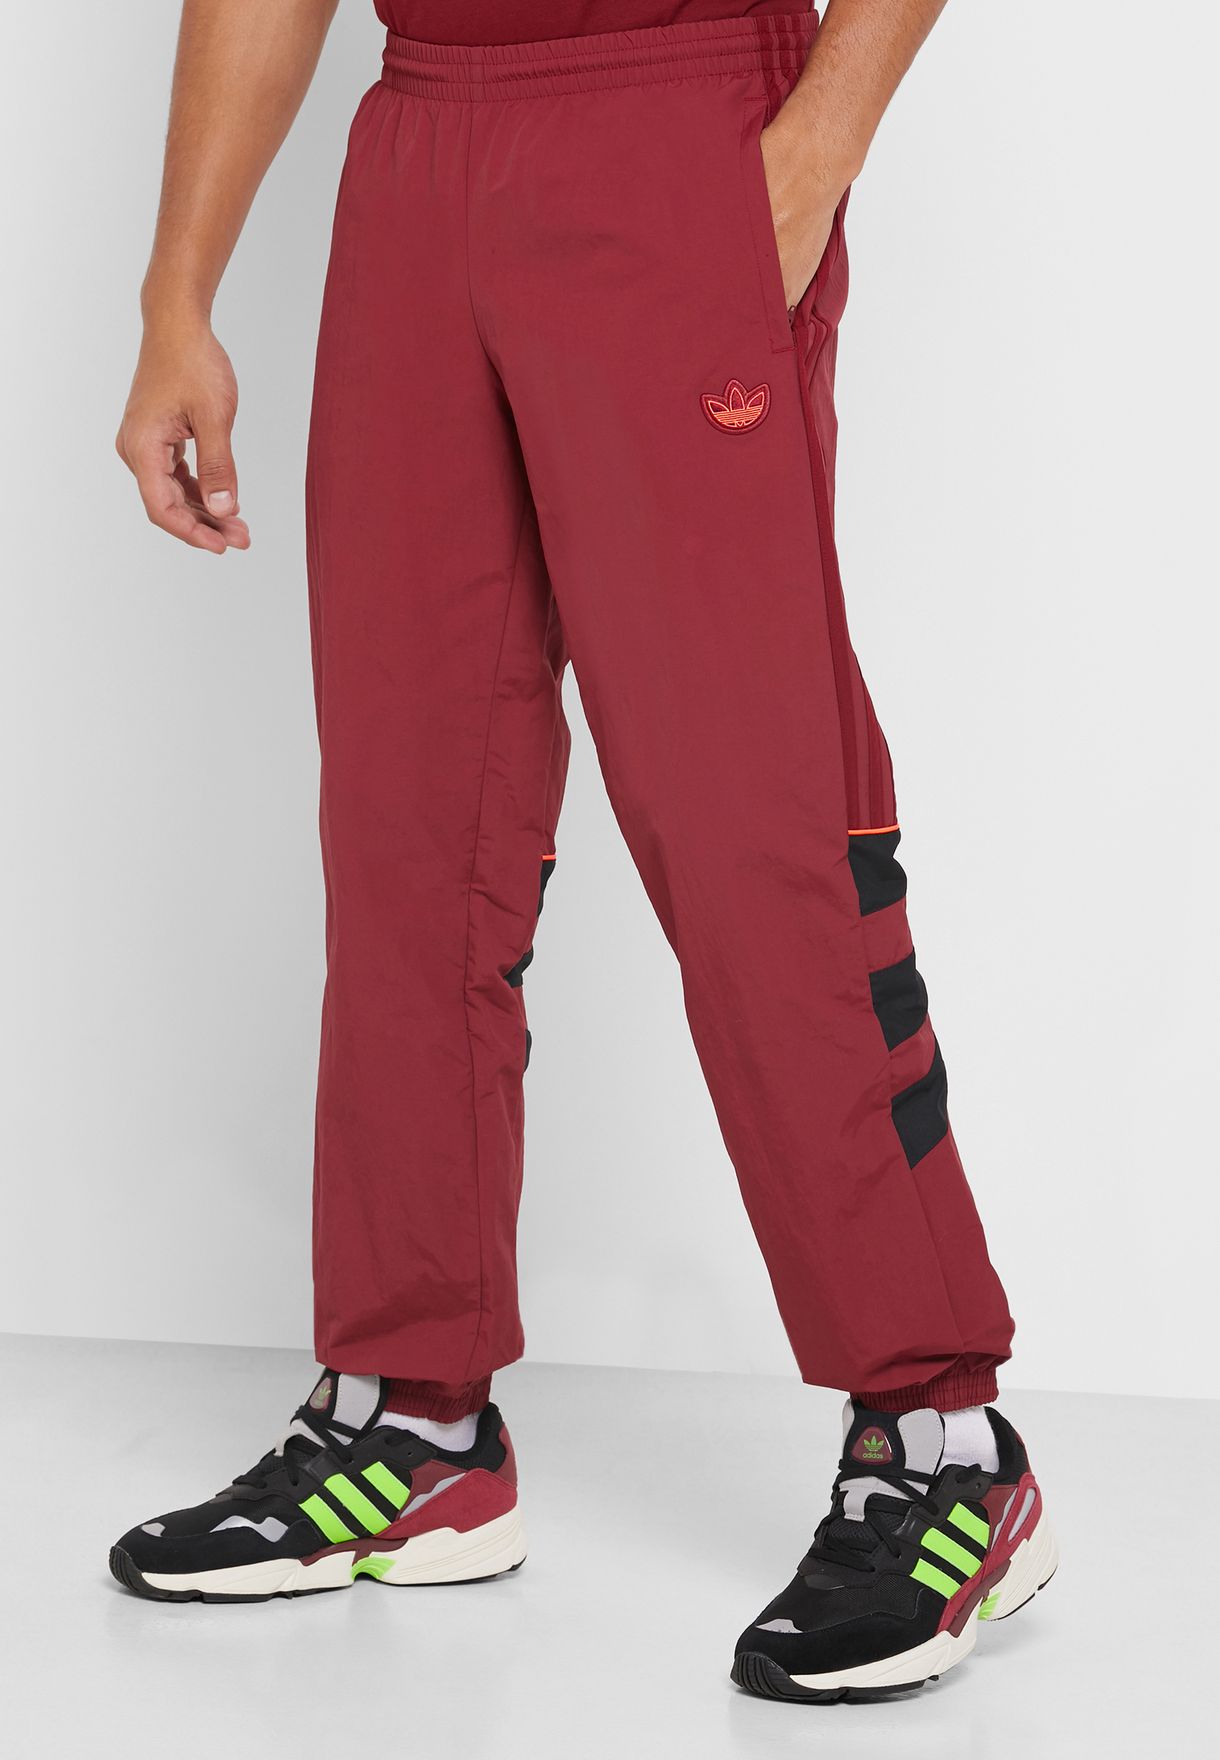 adidas red track pants mens